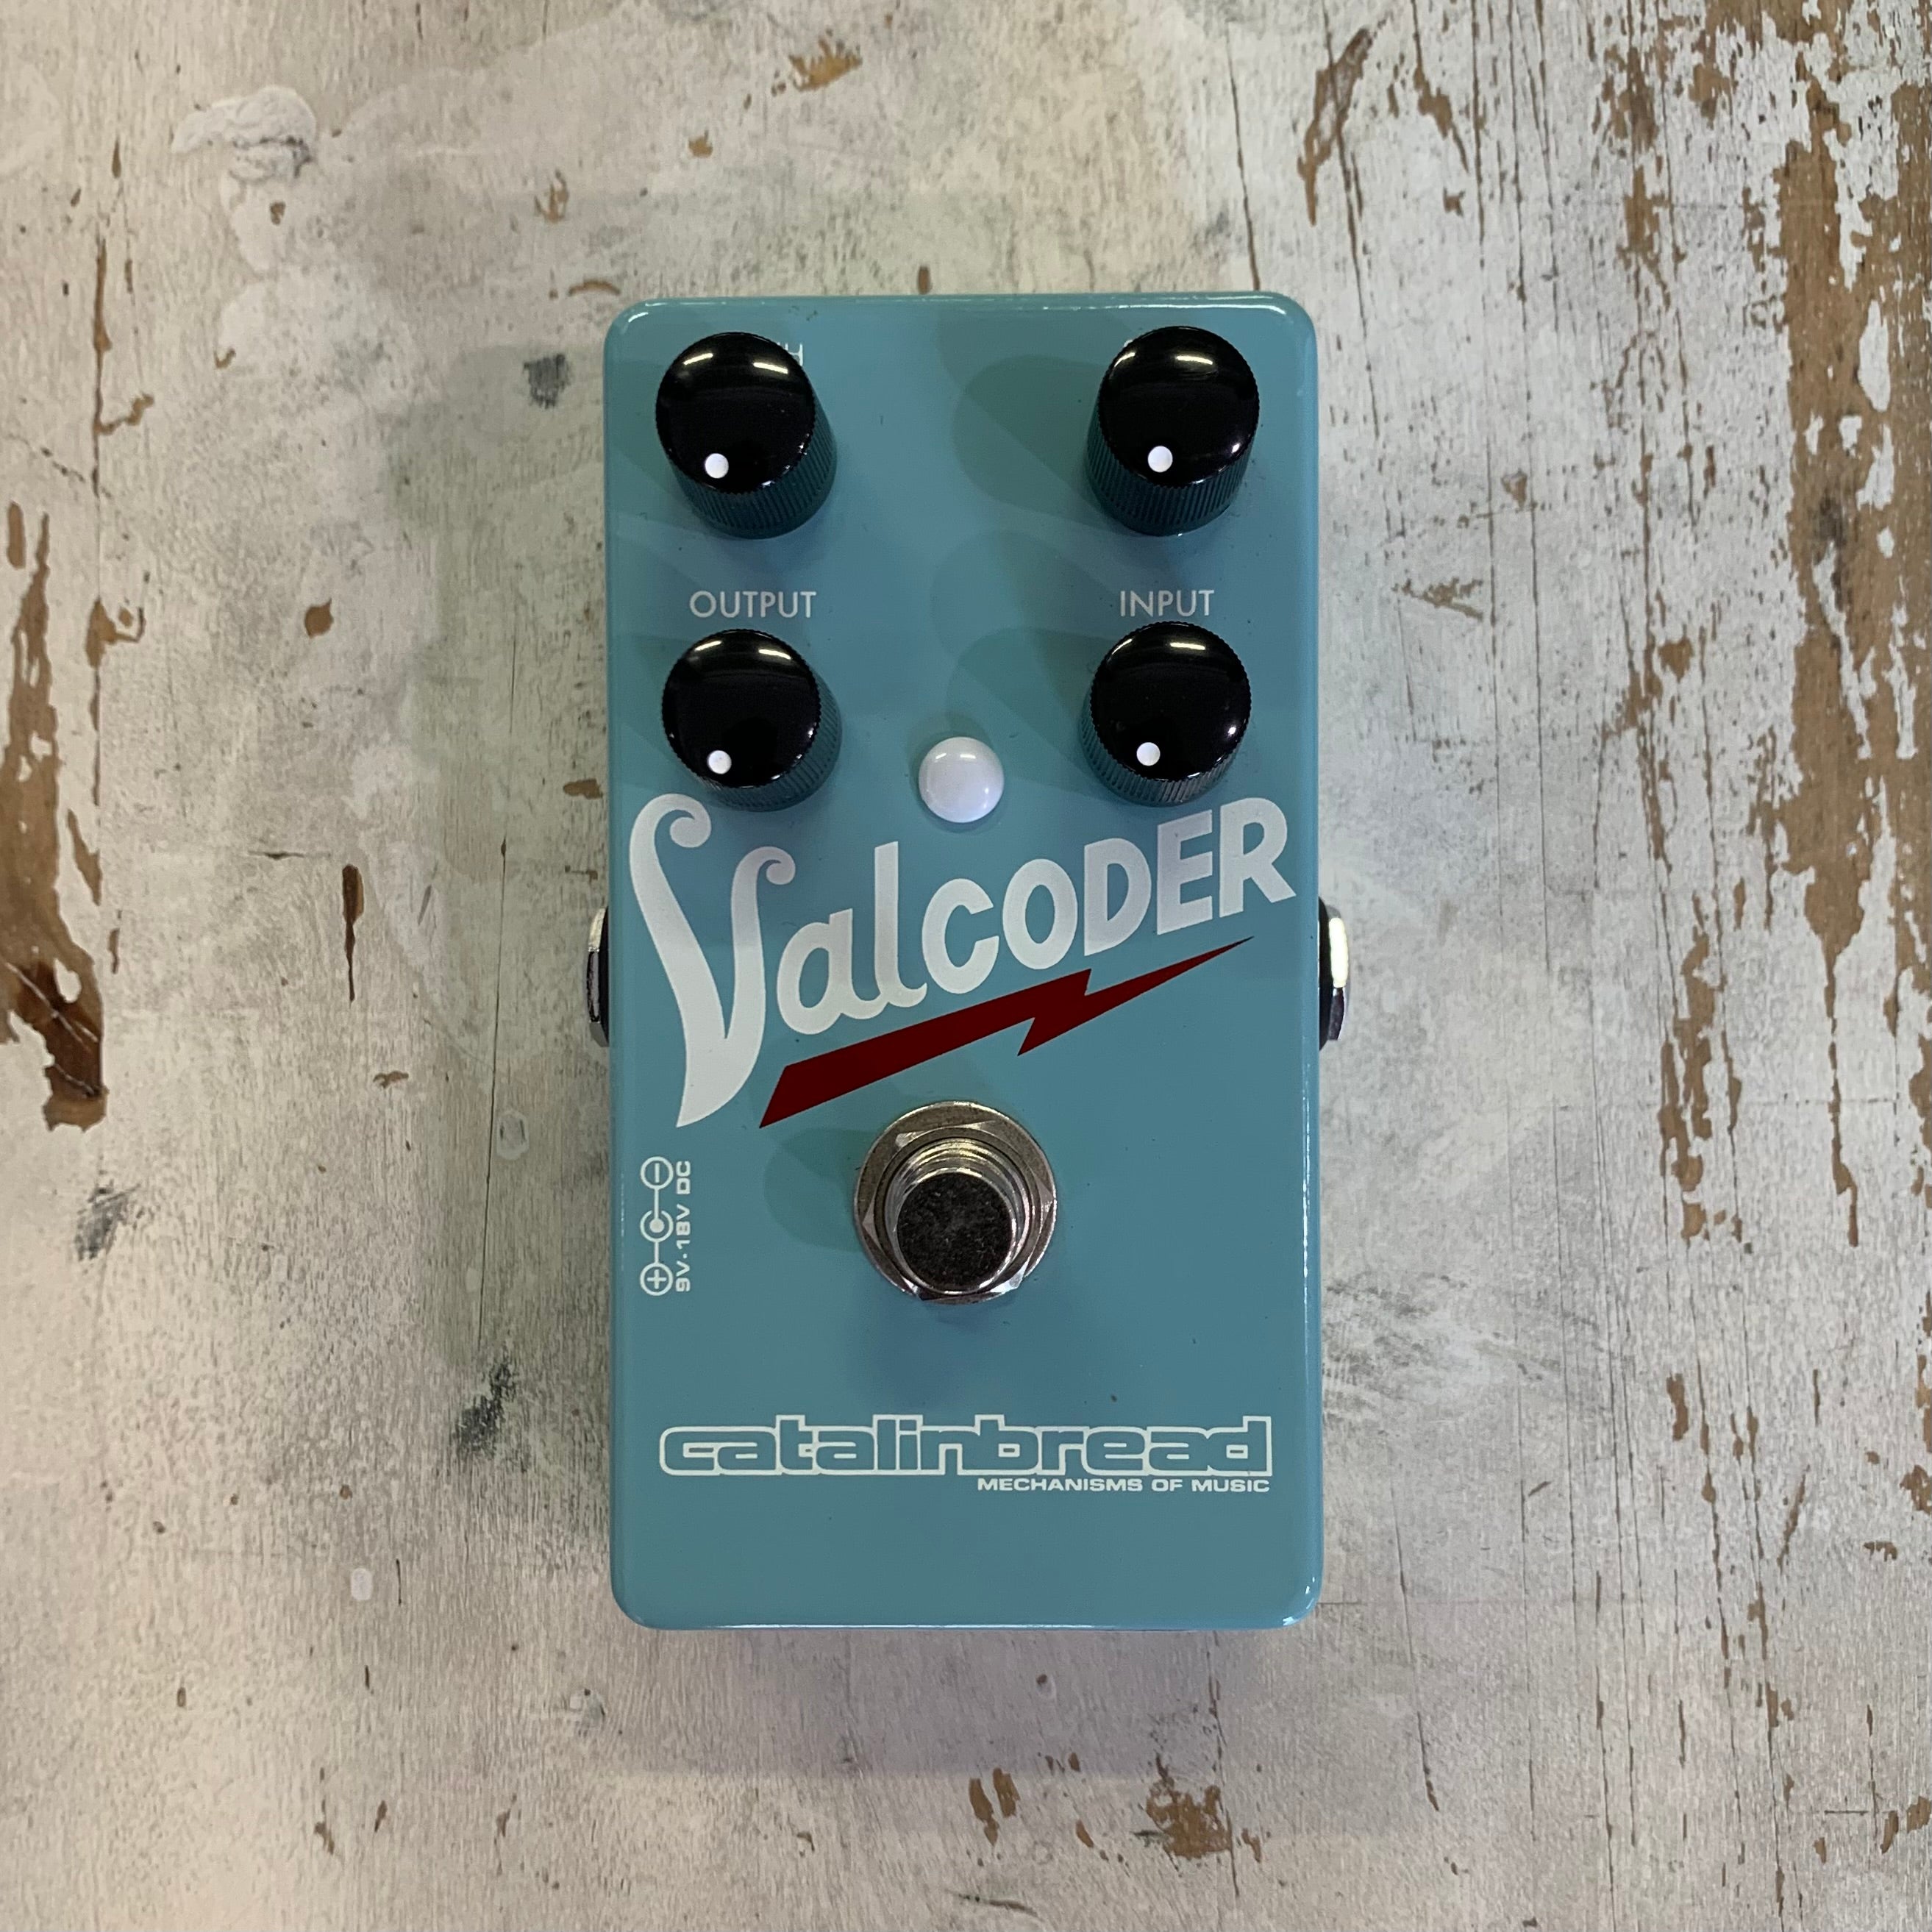 Catalinbread Valcoder – Southside Guitars